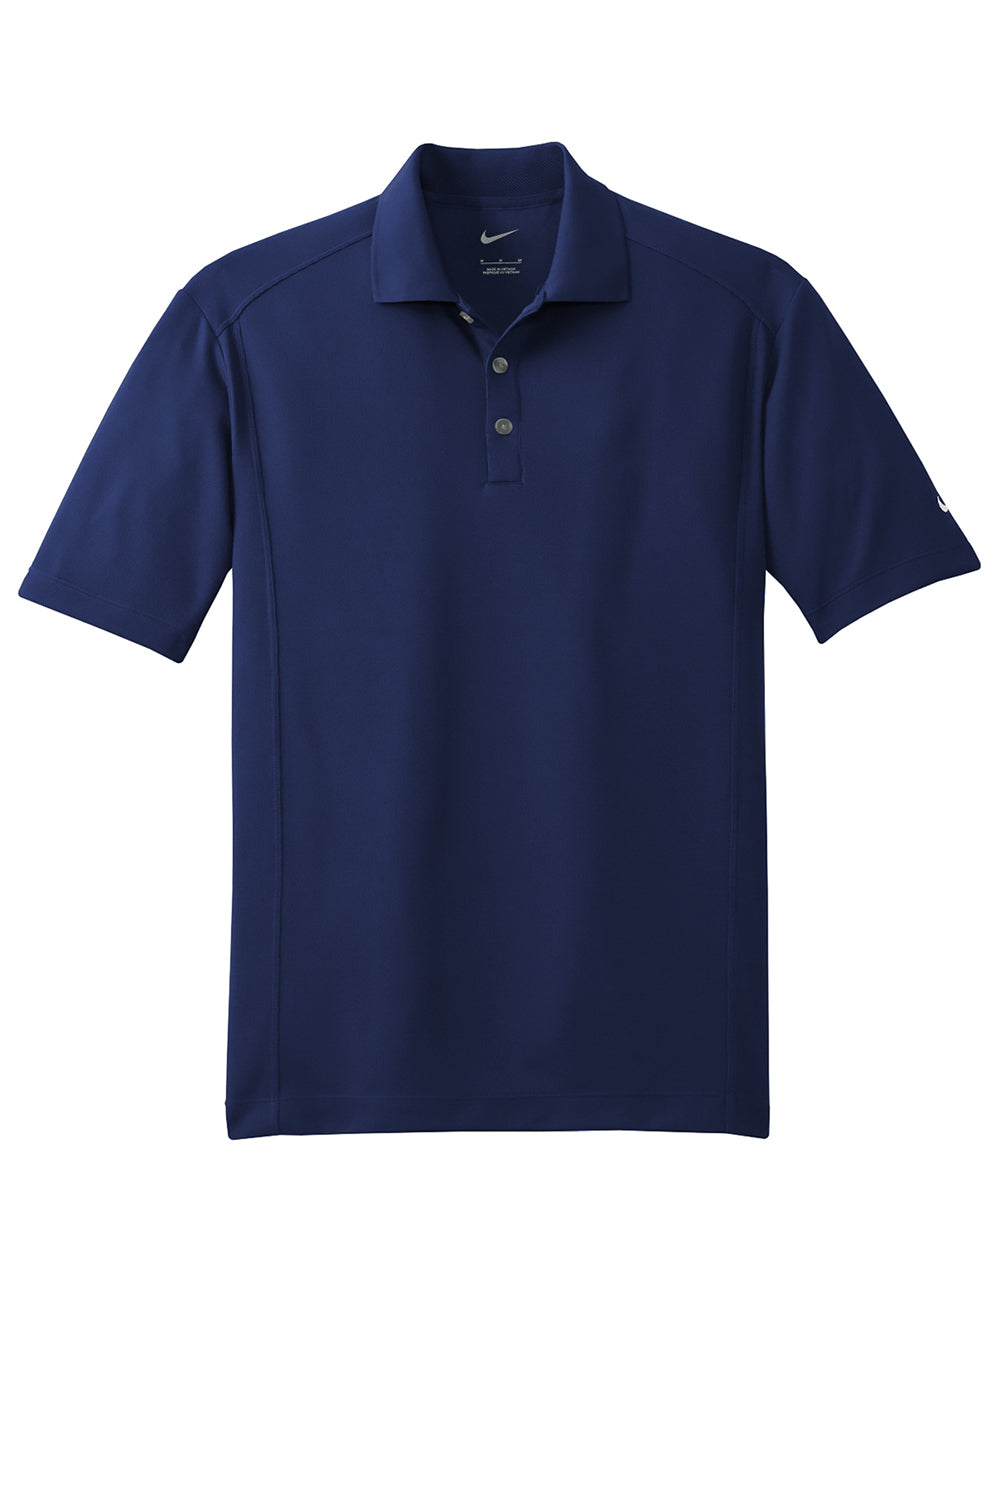 Nike 267020 Mens Classic Dri-Fit Moisture Wicking Short Sleeve Polo Shirt Midnight Navy Blue Flat Front